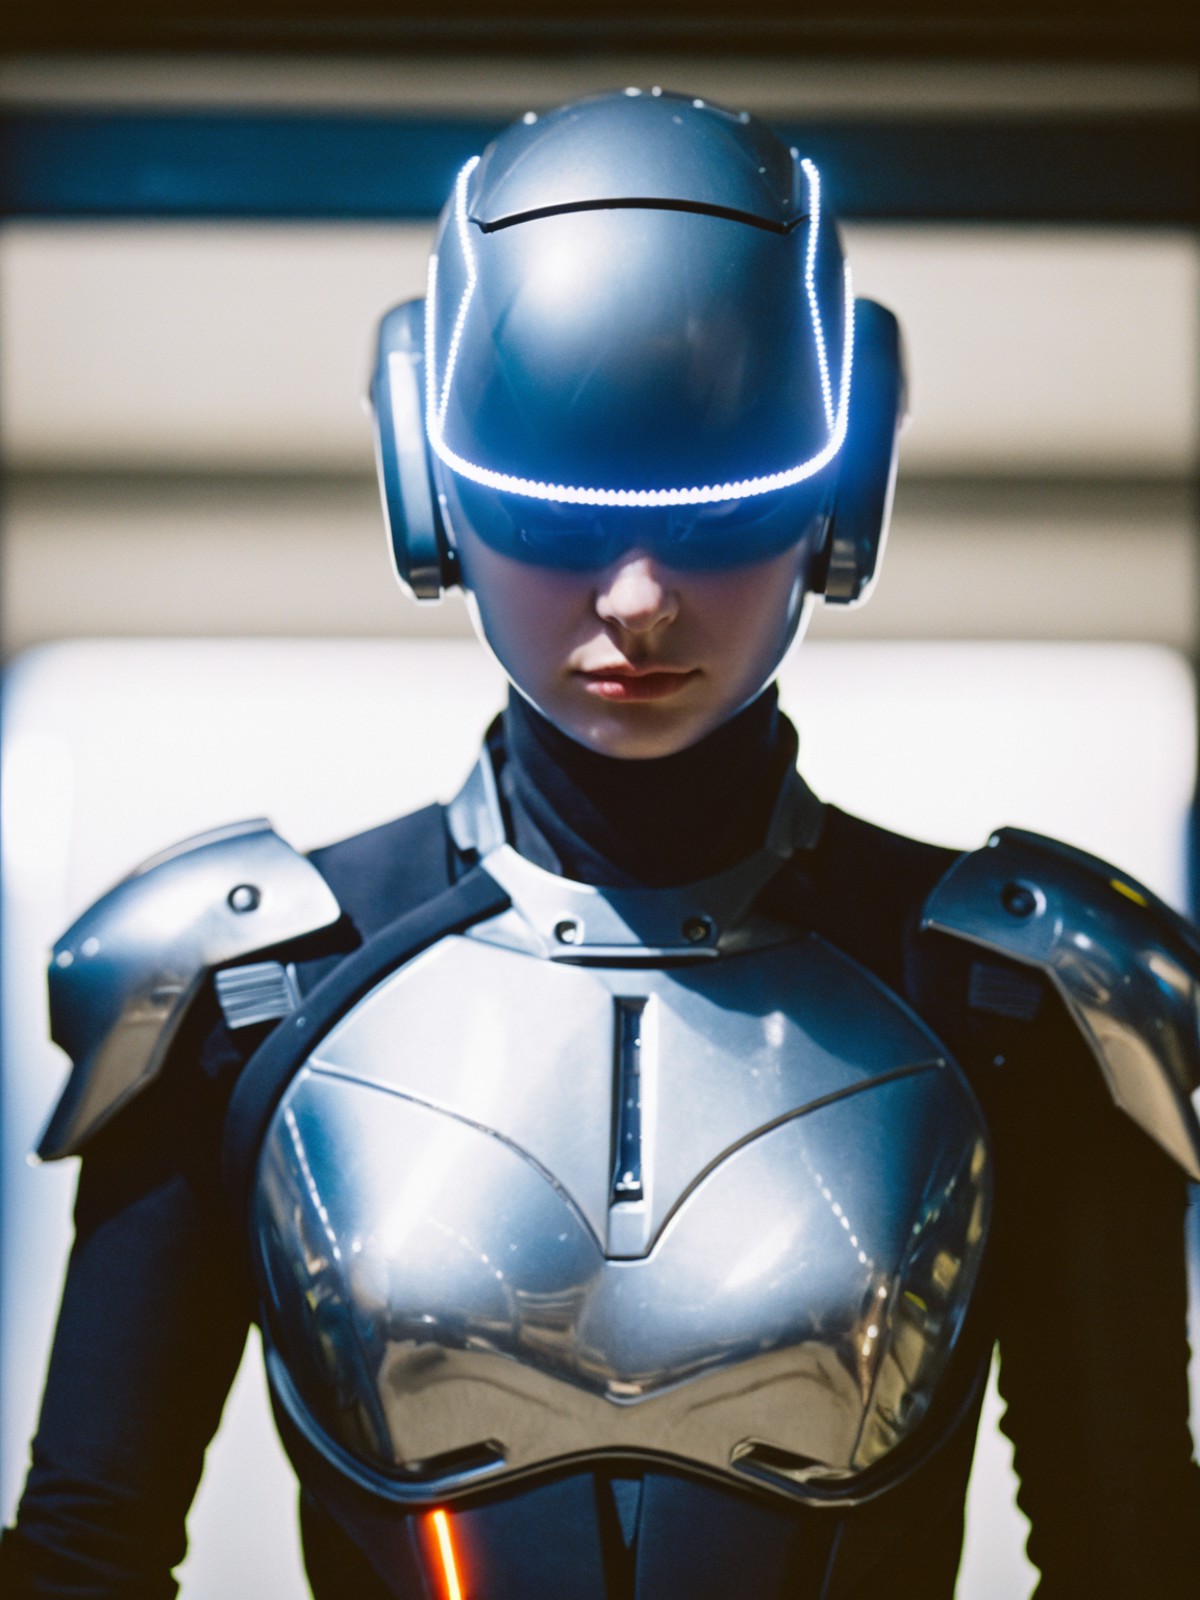 film grain analog photography,female cyborg portrait, futuristic robotic armor, science fiction, close -, head shoulders s...